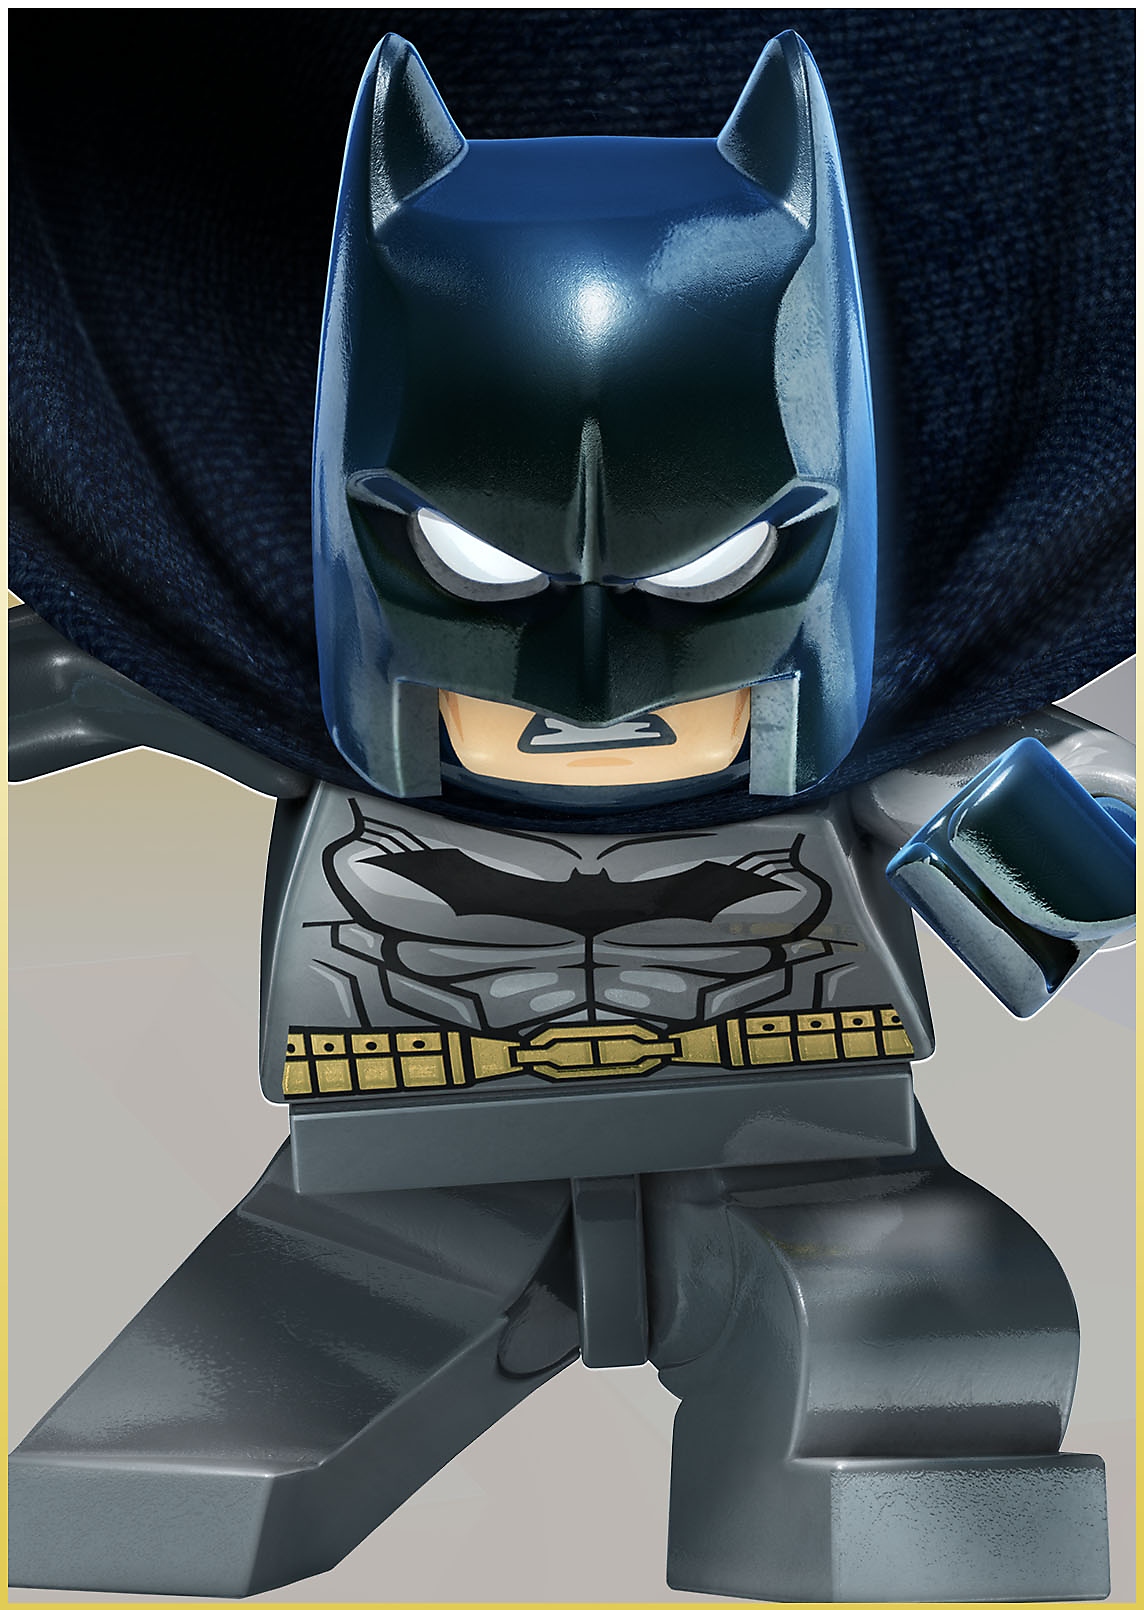 Lego Batman schwingt sich herab